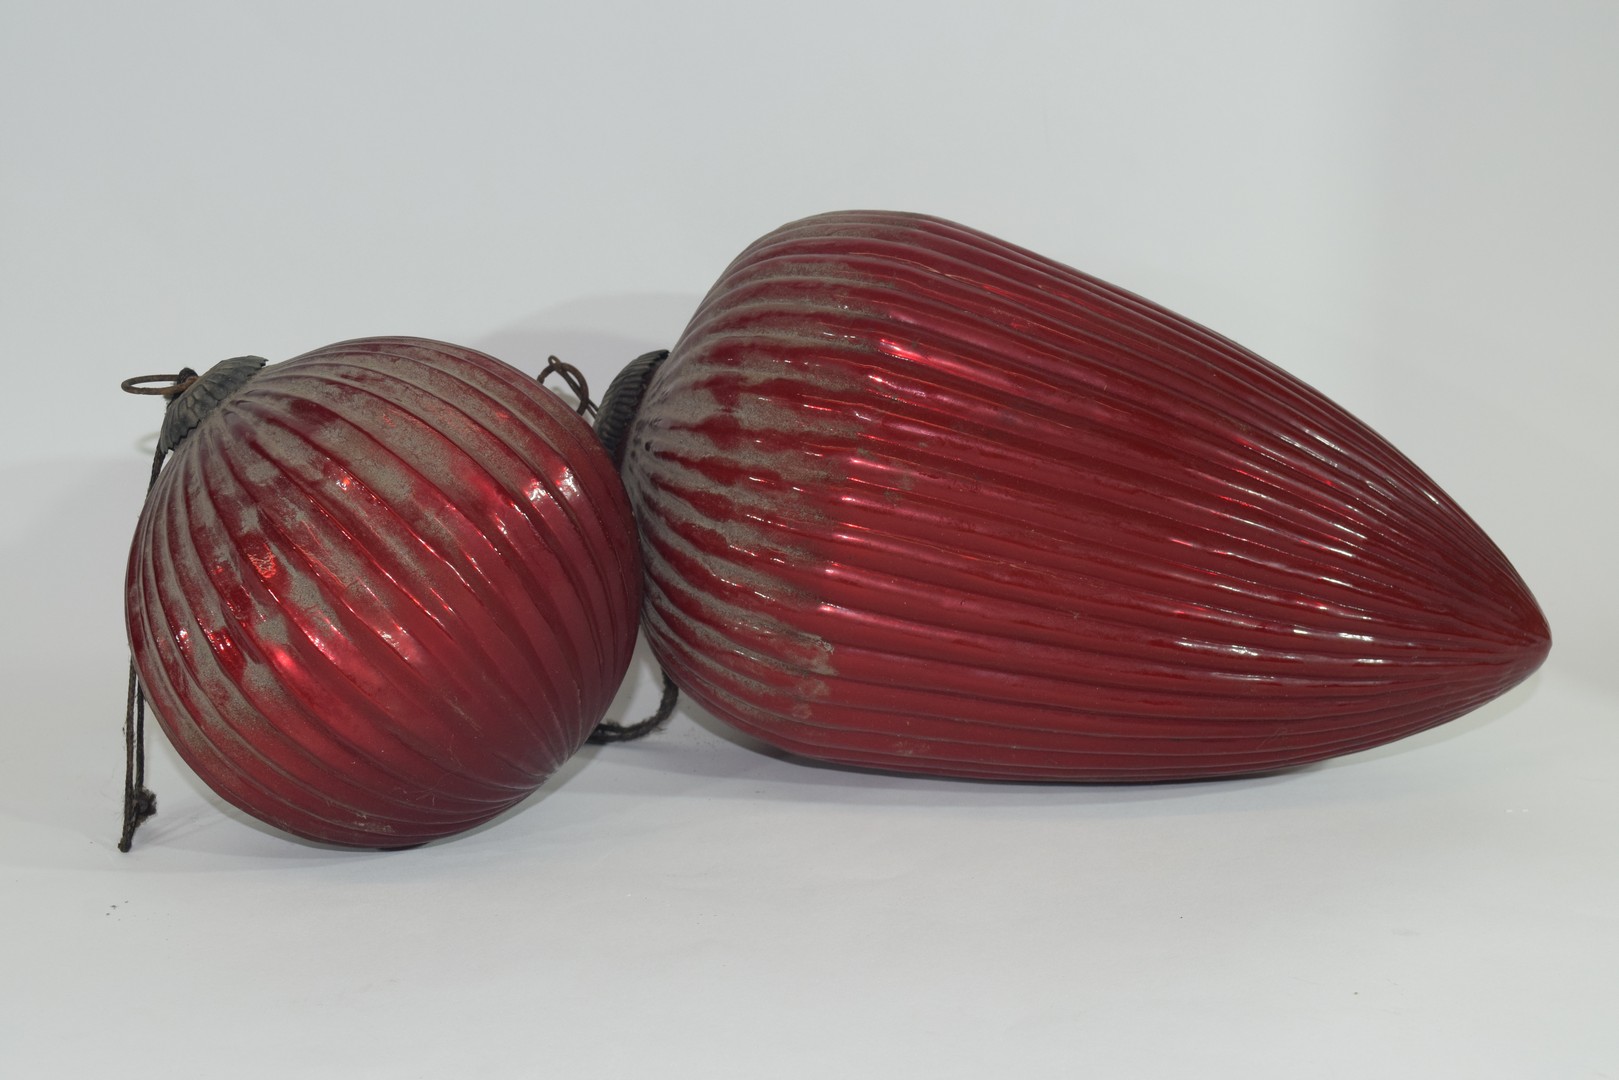 Two red glass Oriental lanterns